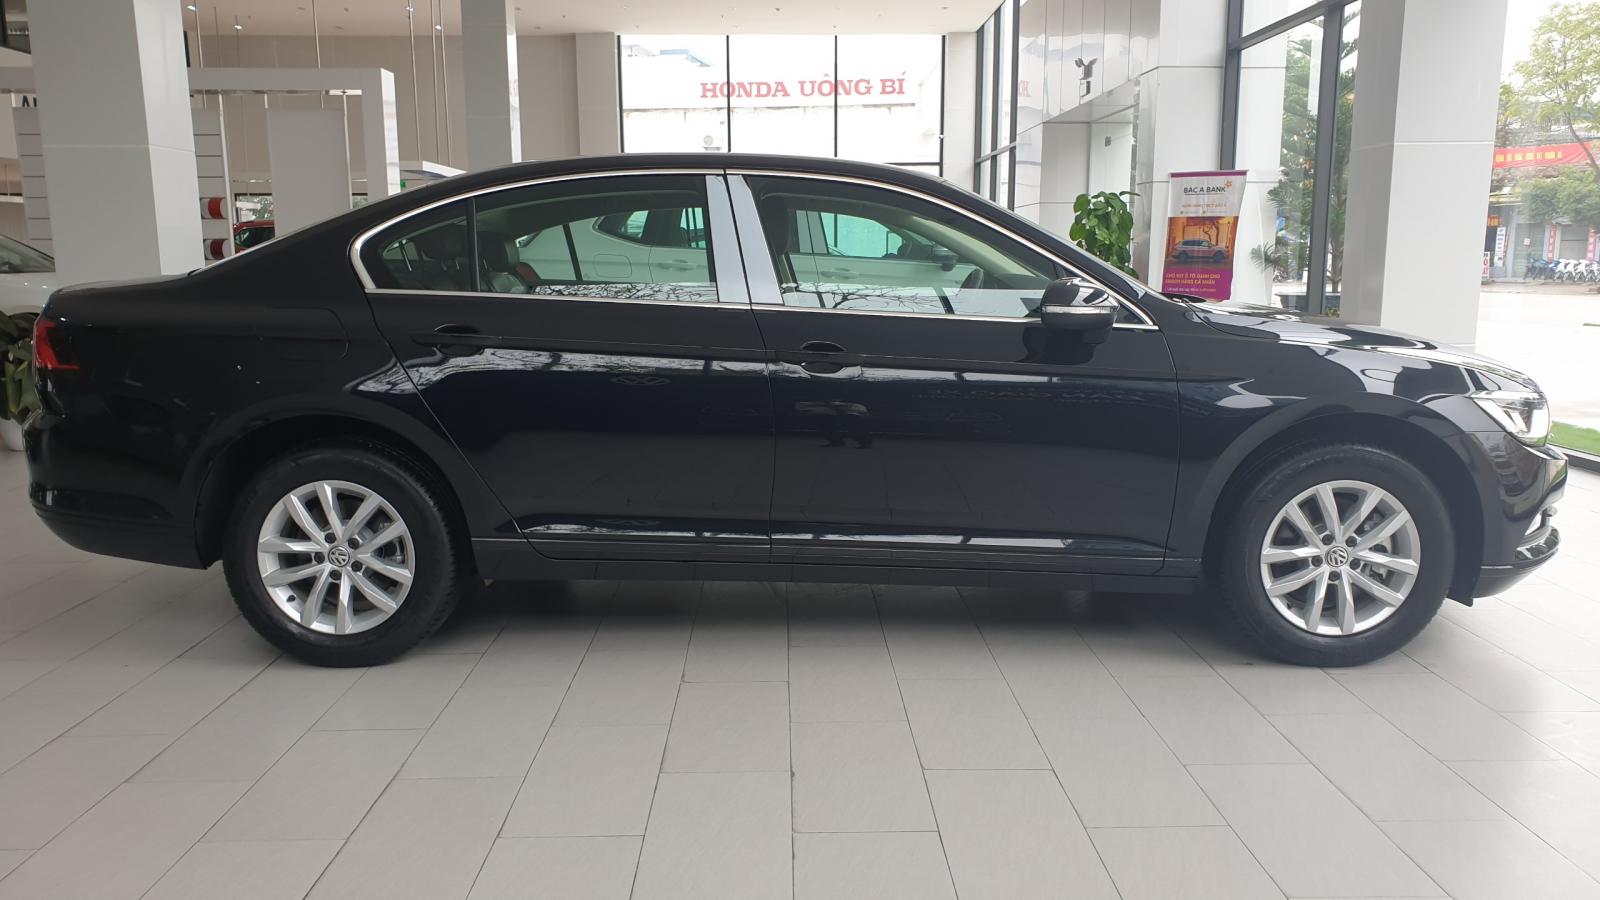 Volkswagen Passat hight 2018 - Volkswagen Passat Comfort, màu đen tặng quà khủng, hỗ trợ trả góp